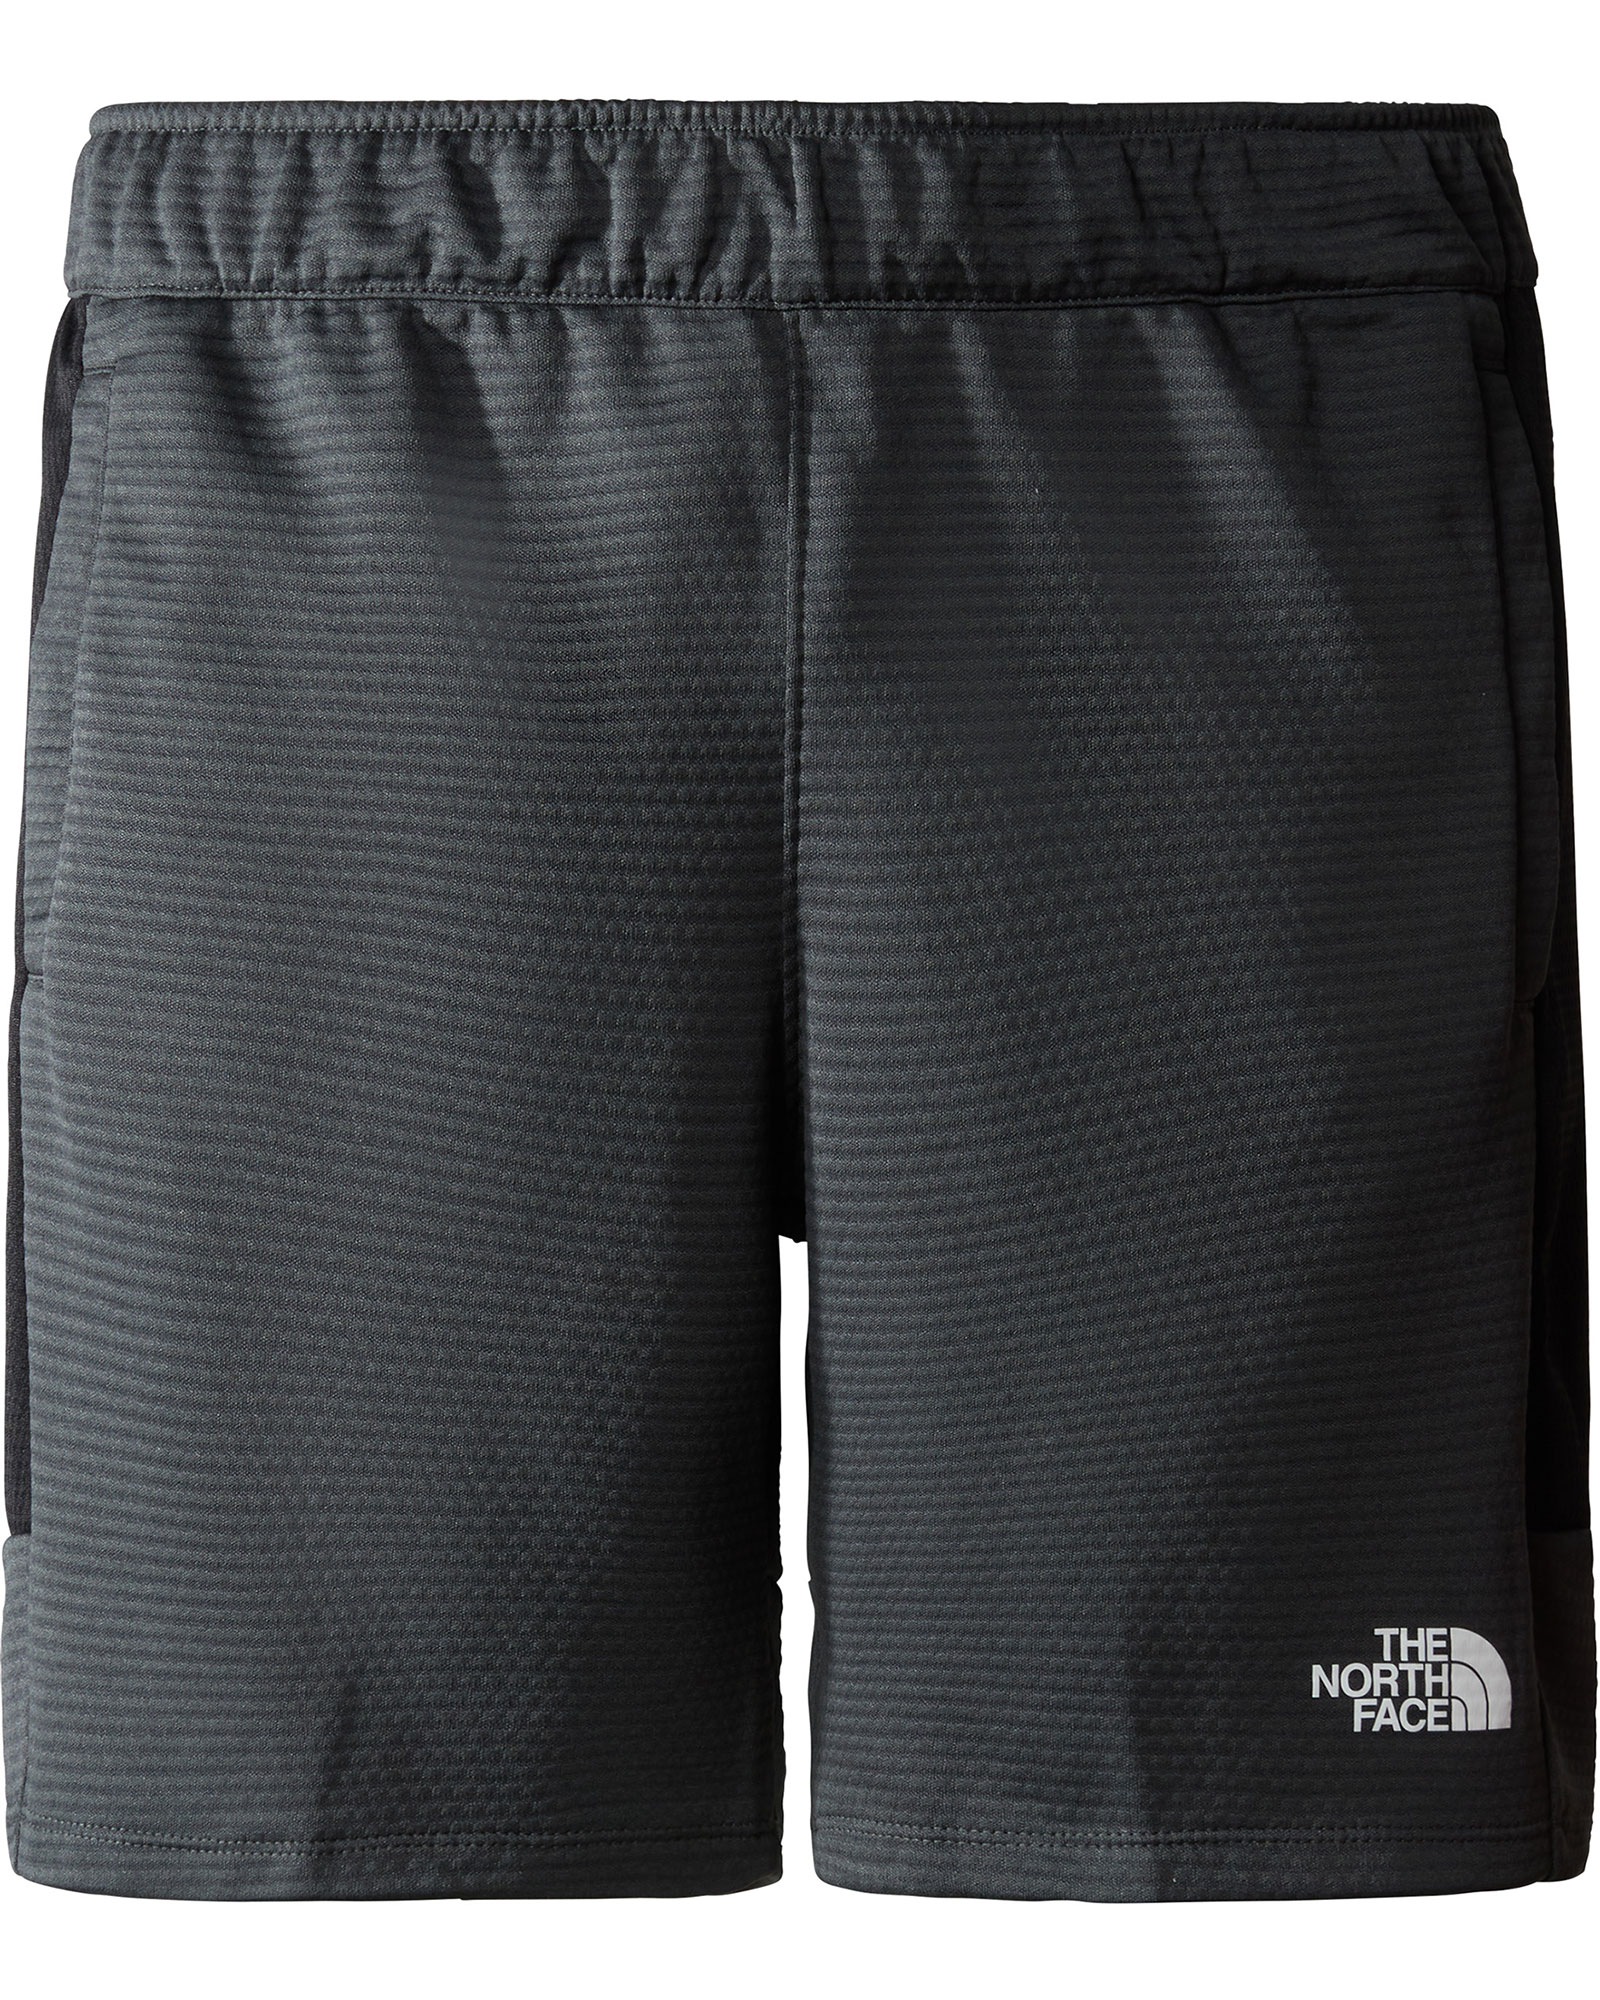 The North Face Men’s MA Fleece Shorts - Asphalt Grey-TNF Black M